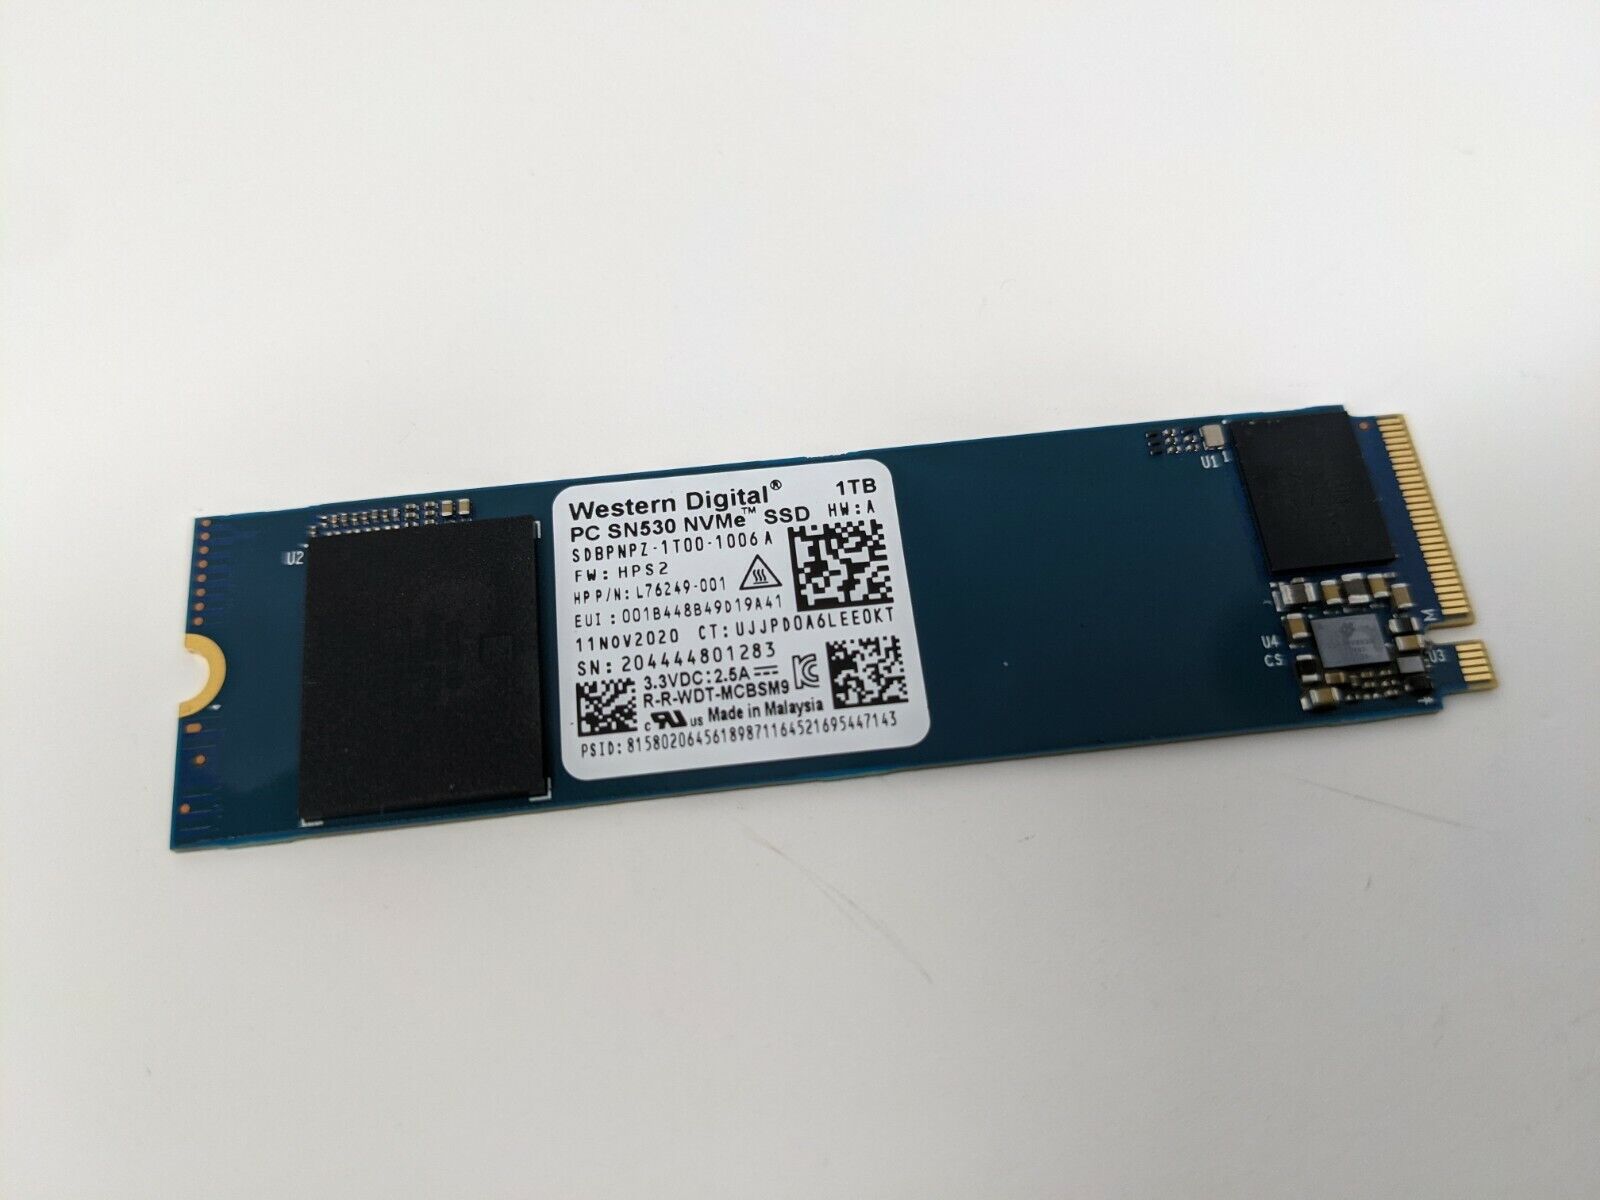 Western Digital Blue SN530 1TB Internal NVME (SDBPNPZ-1T00-100A) SSD